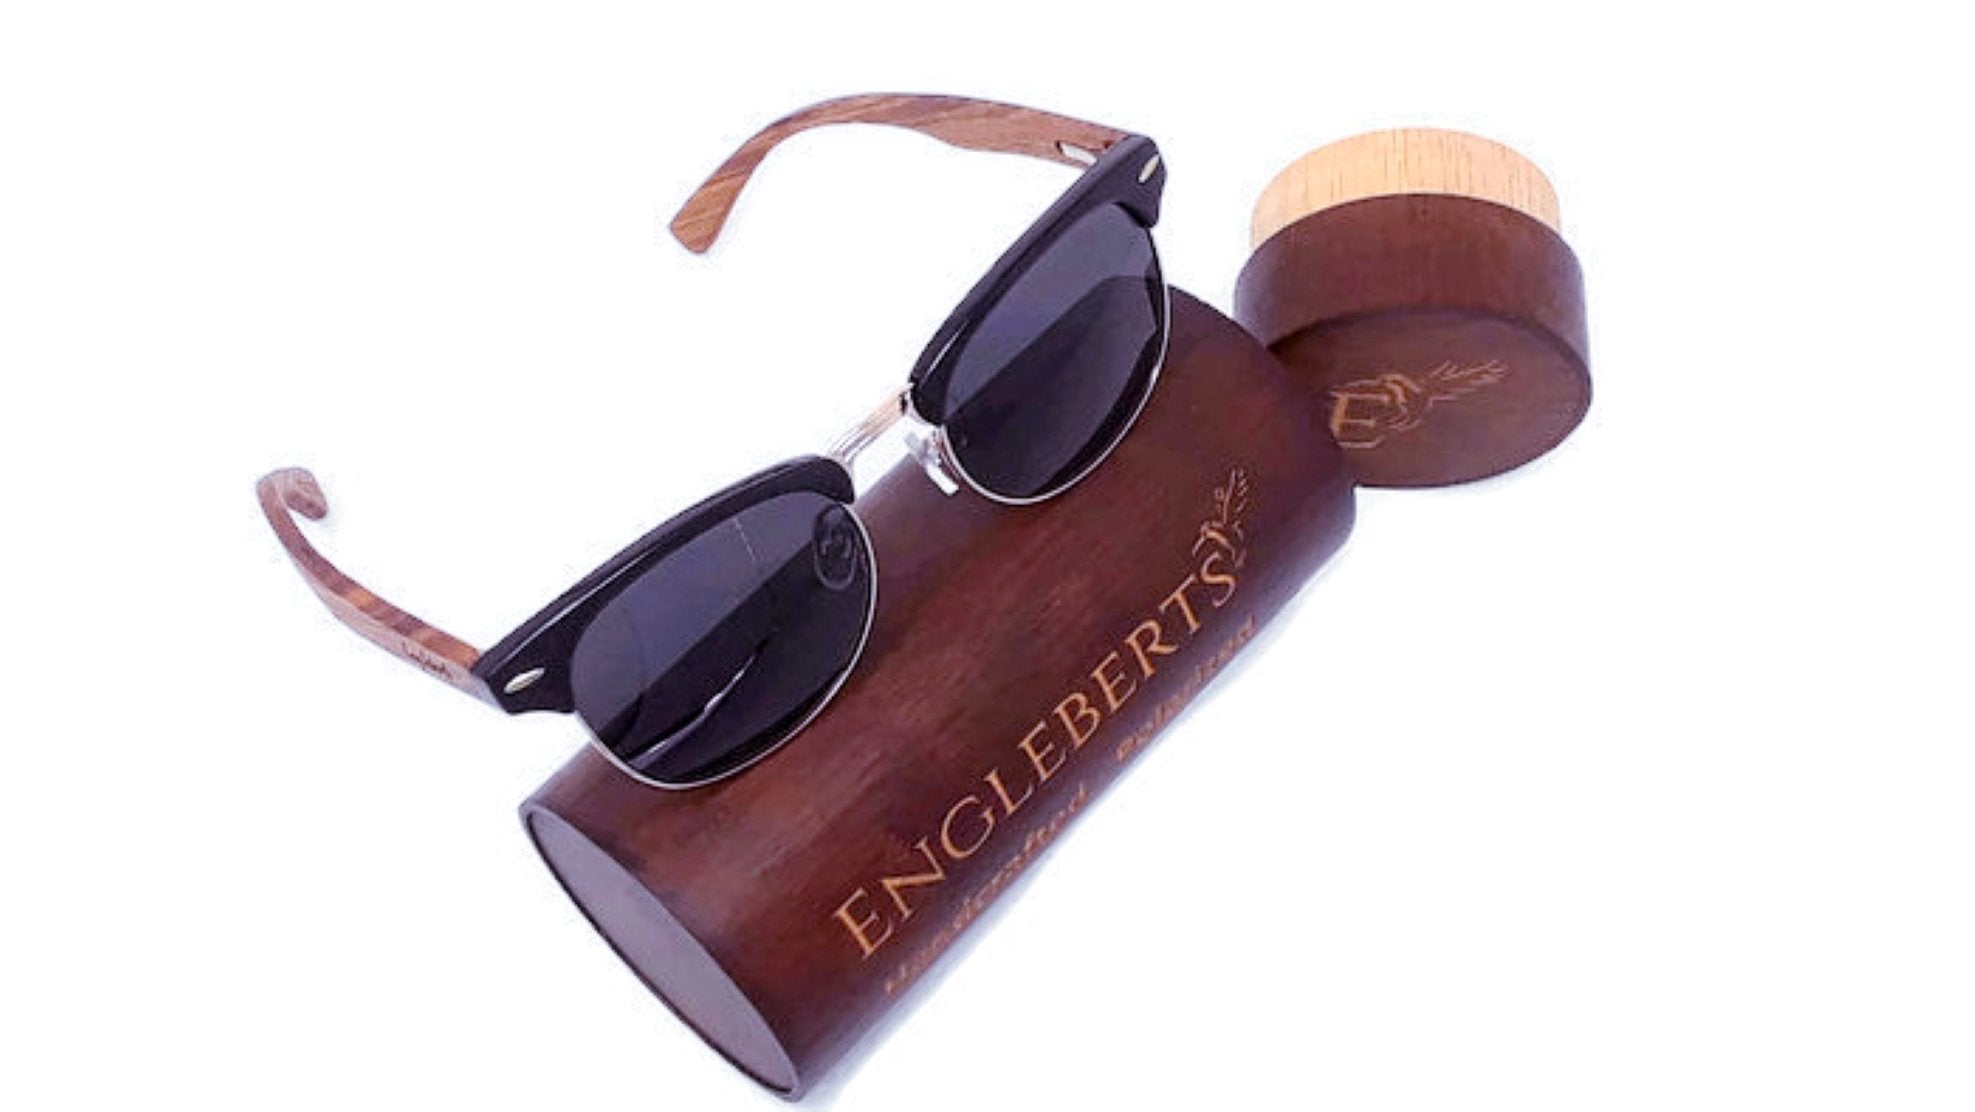 Wood Club Style Sunglasses - Shop Luxurious57